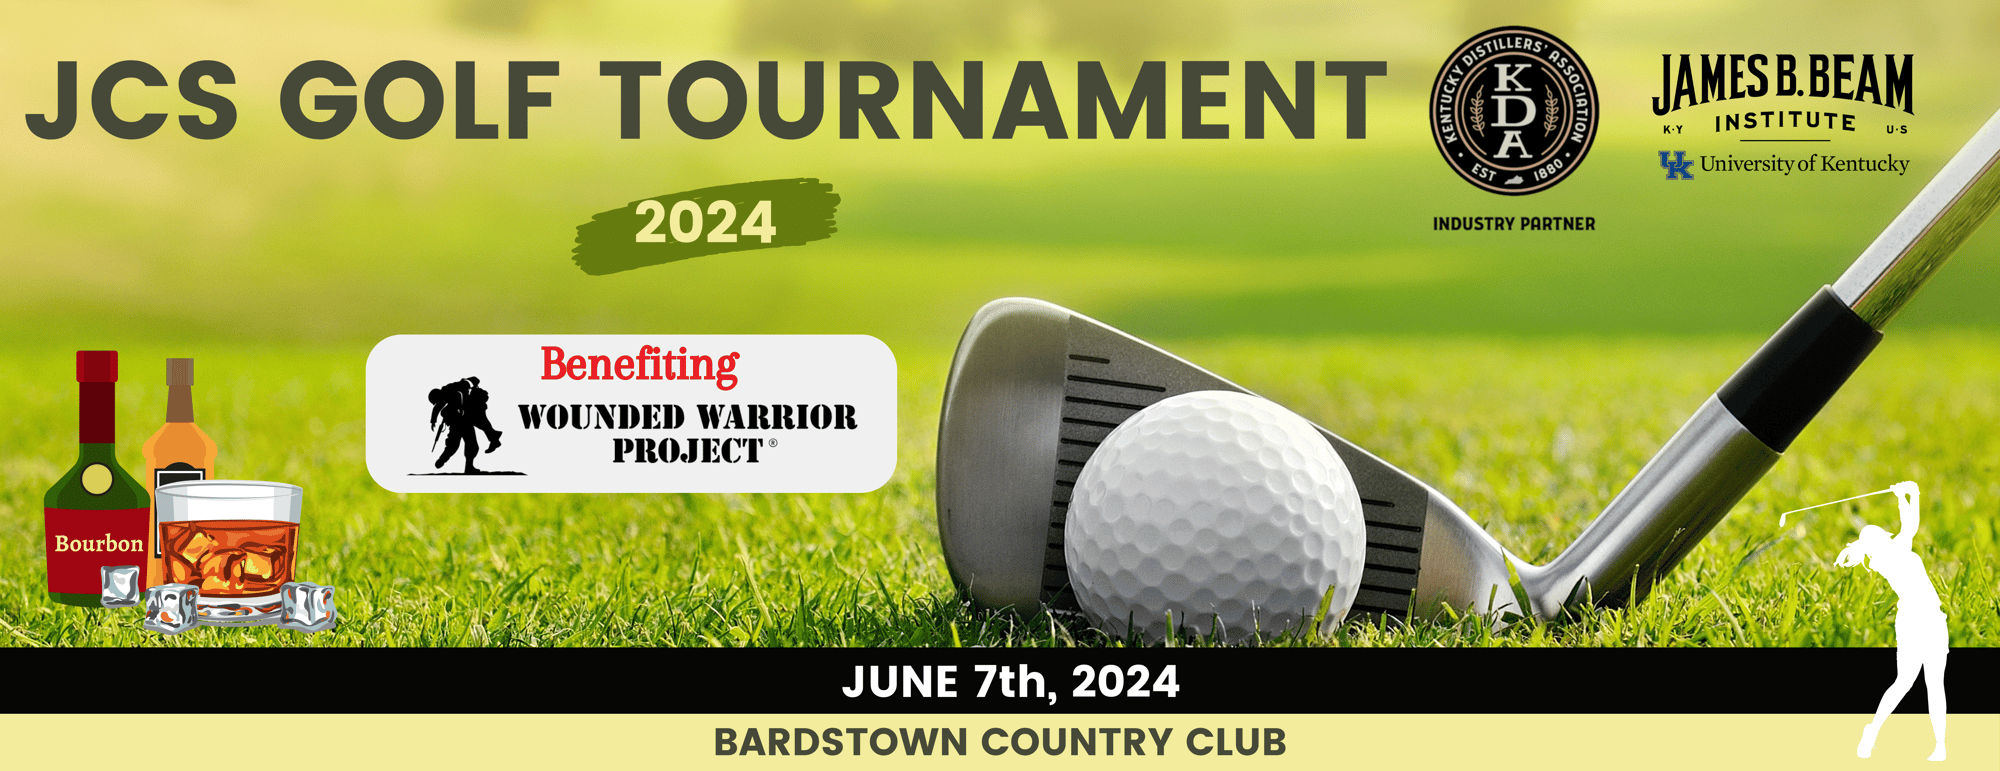 JCS Golf Tournament 2023 (18 × 24 in) (1)